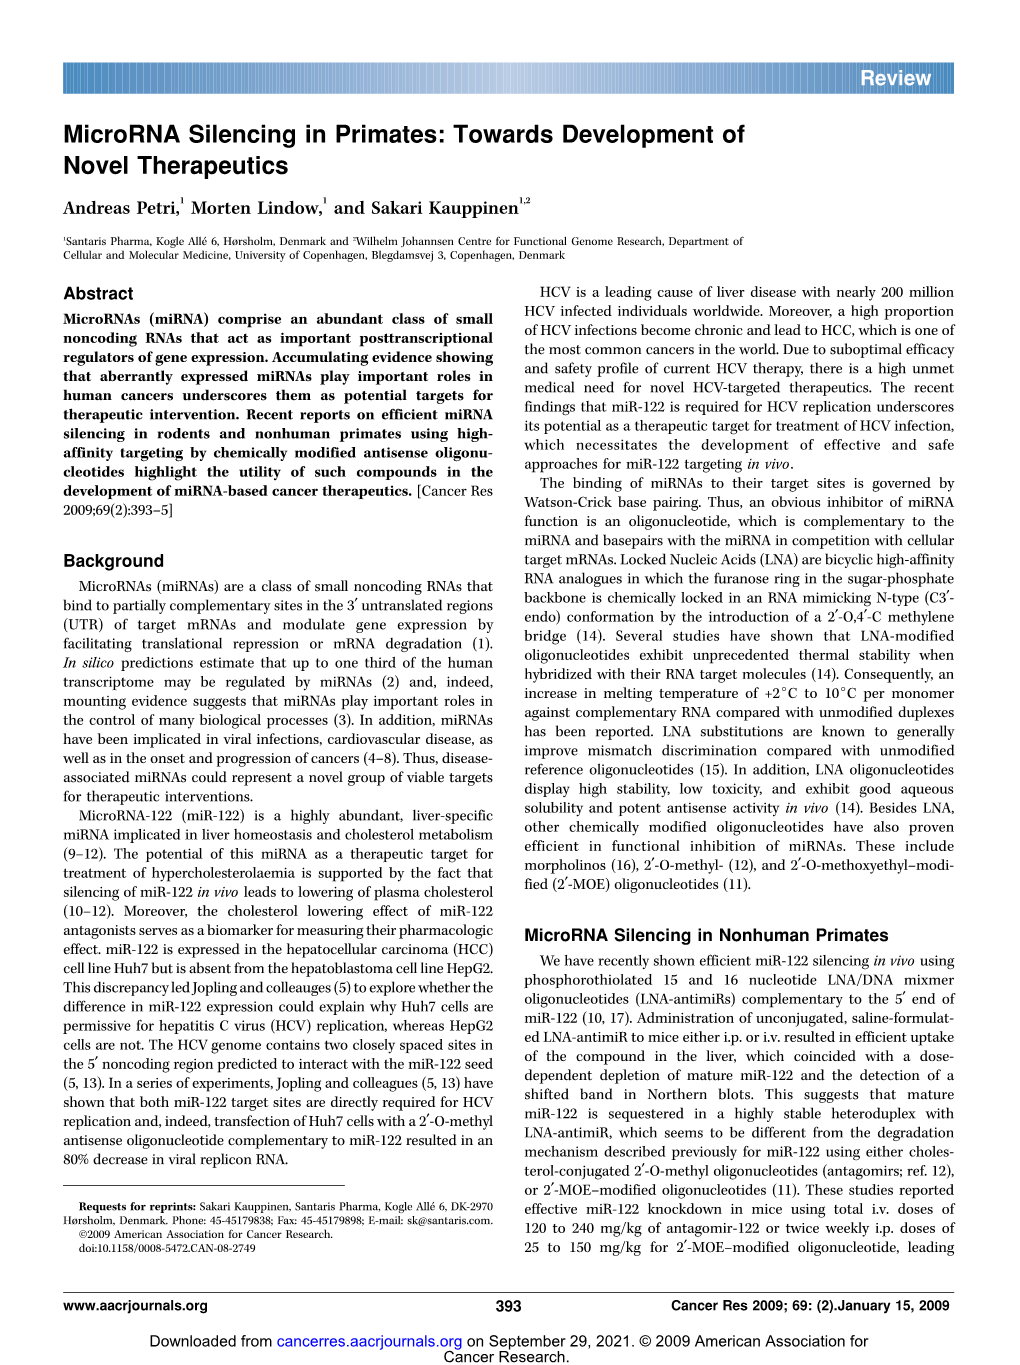 Microrna Silencing in Primates: Towards Development of Novel Therapeutics Andreas Petri,1 Morten Lindow,1 and Sakari Kauppinen1,2